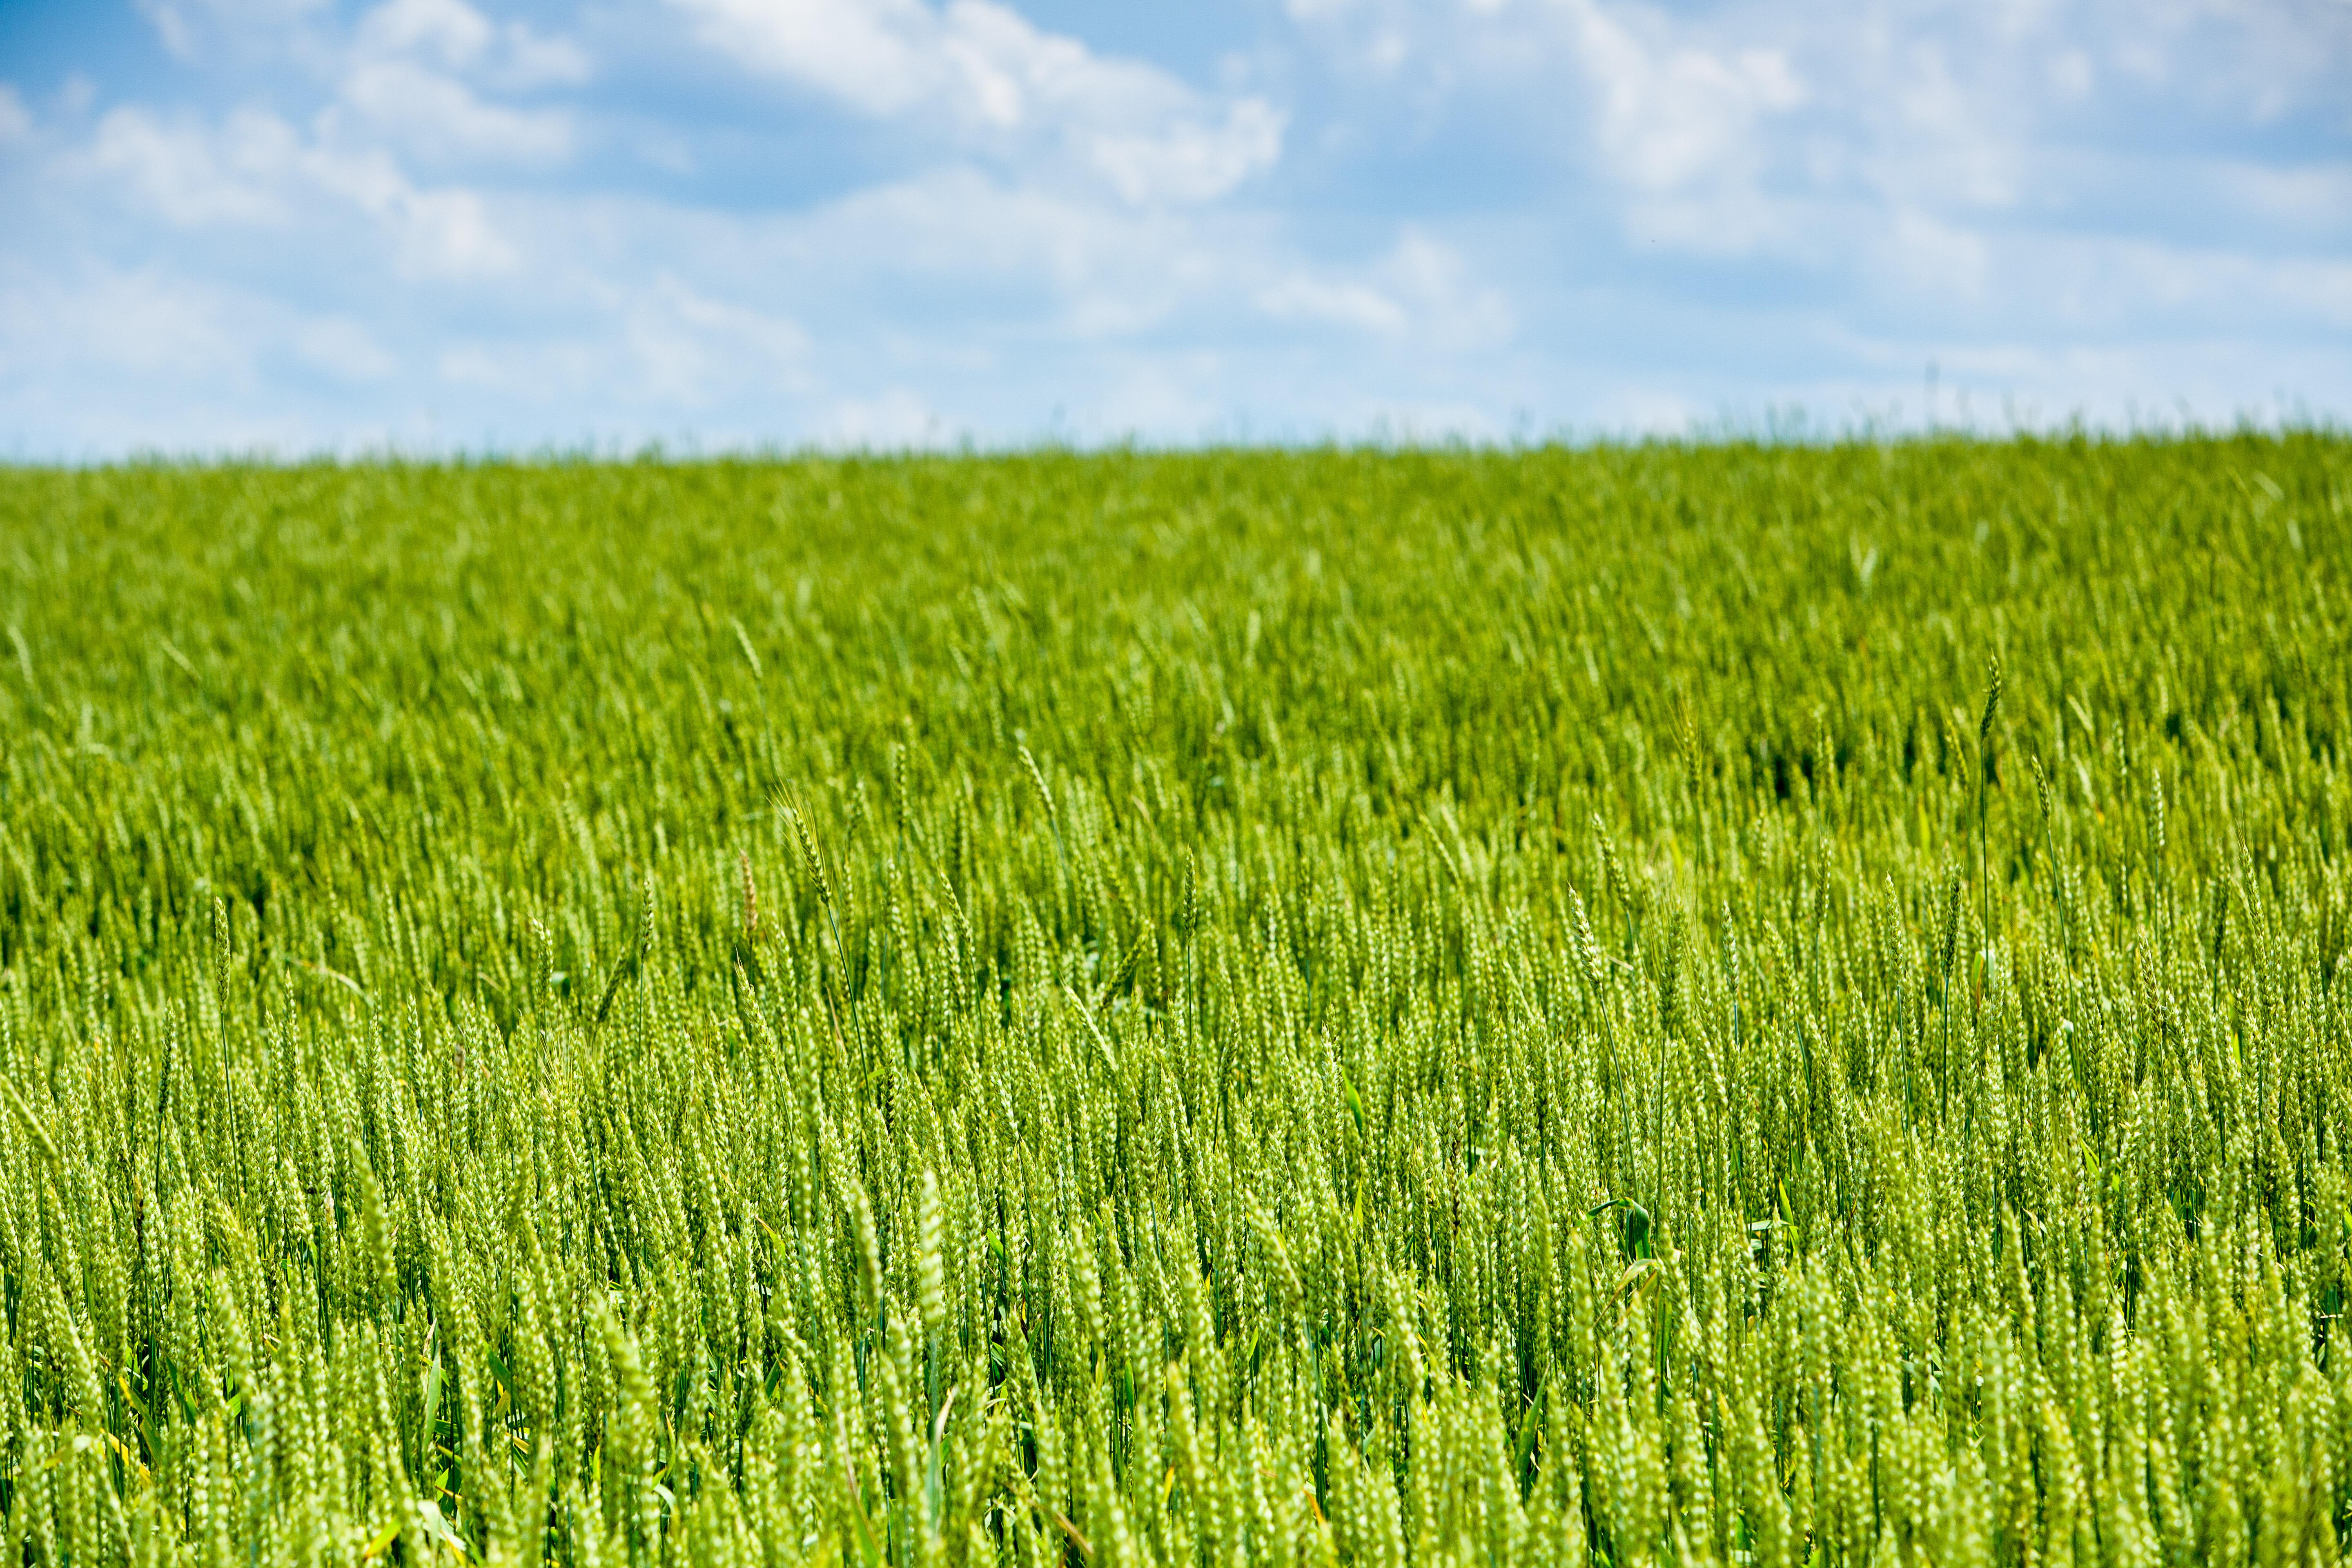 Wheat field. Photo by Matt Barton, UK agricultural communications.